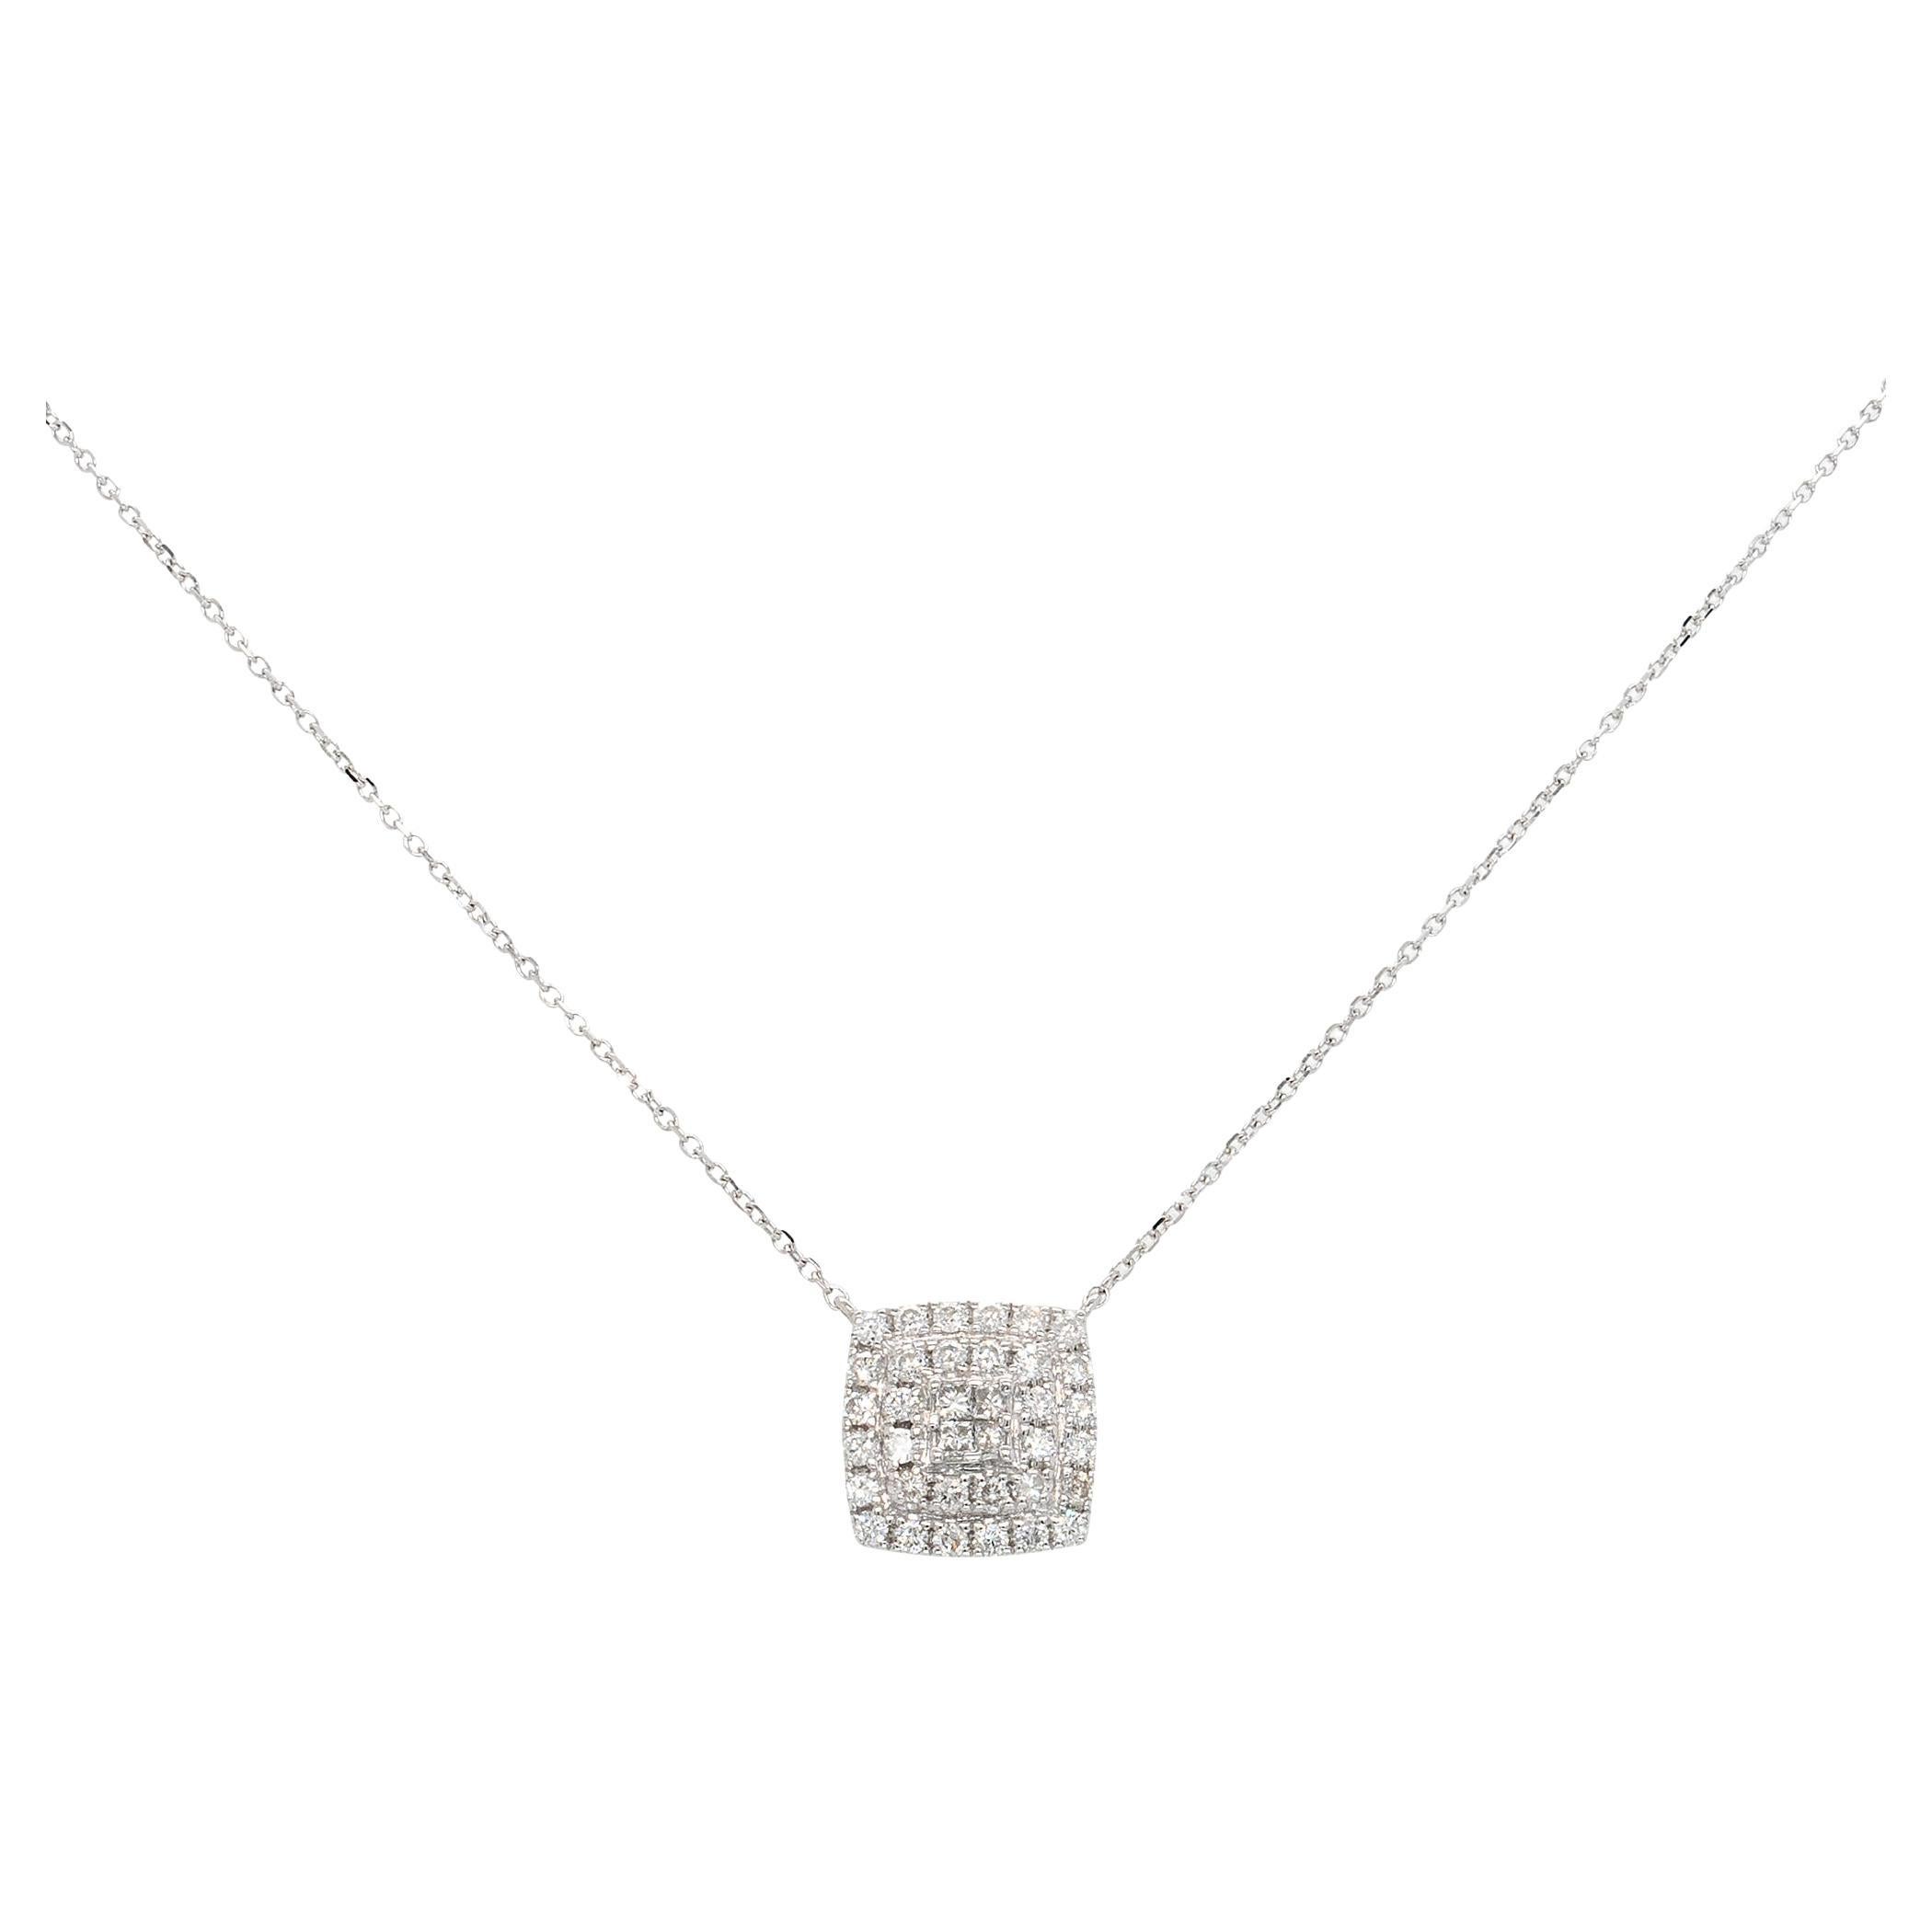 Collier pendentif en or blanc 14 carats avec diamants naturels de 0,50 carat